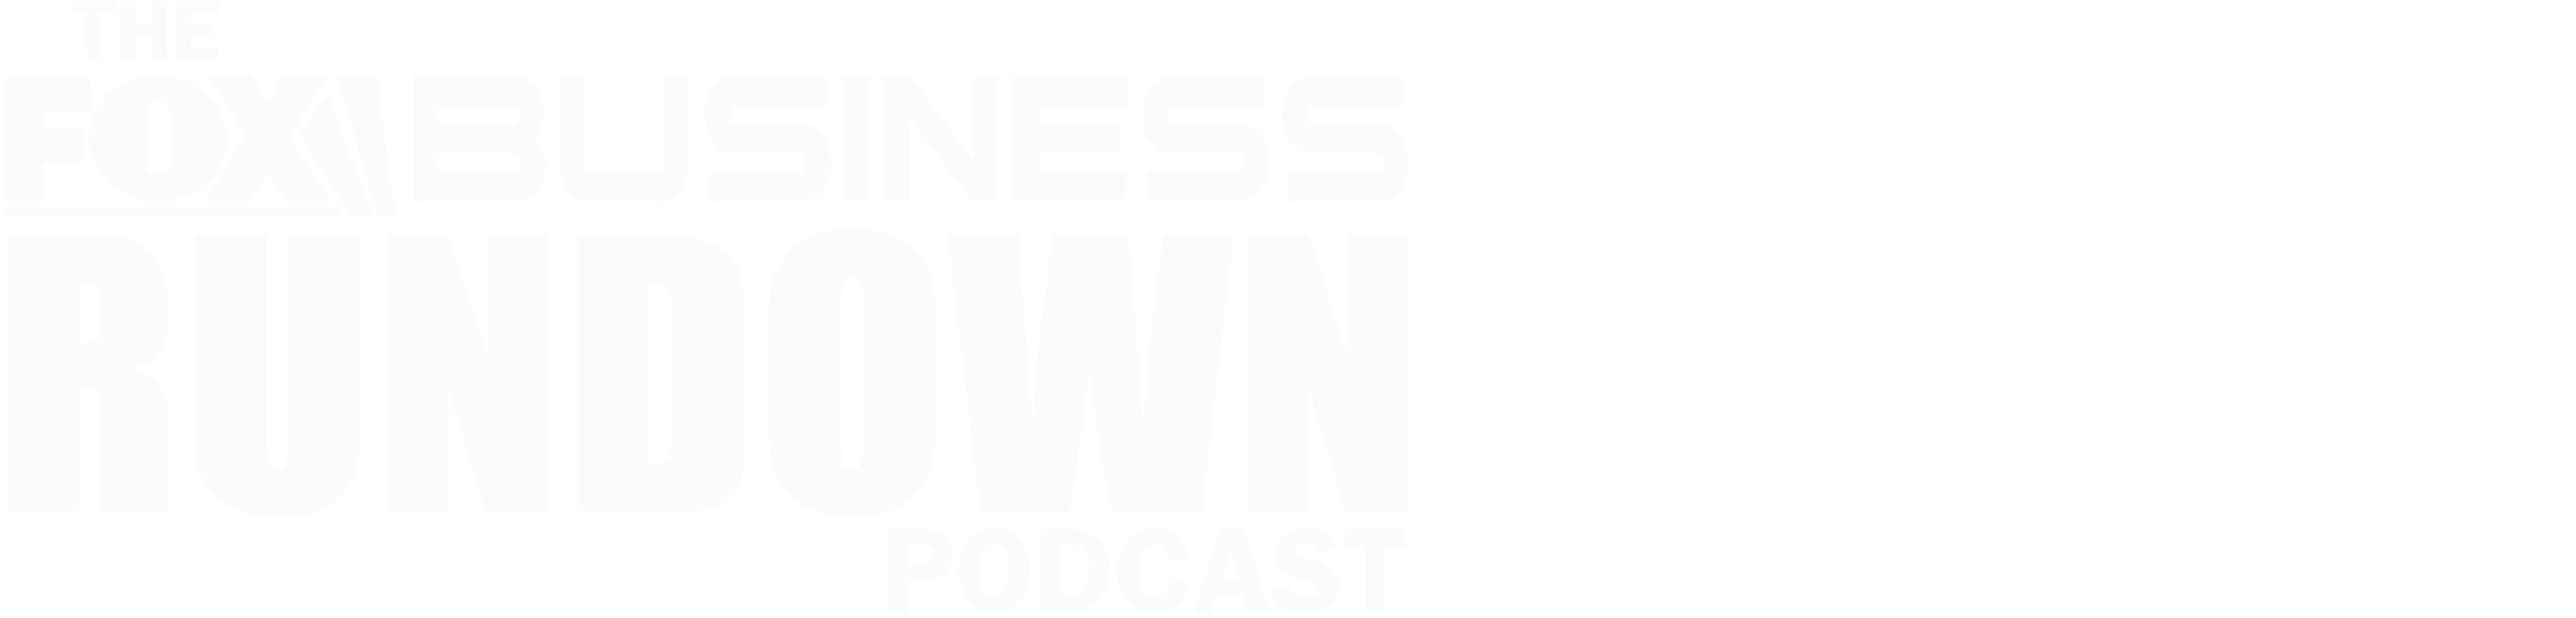 FOX Business Rundown logo